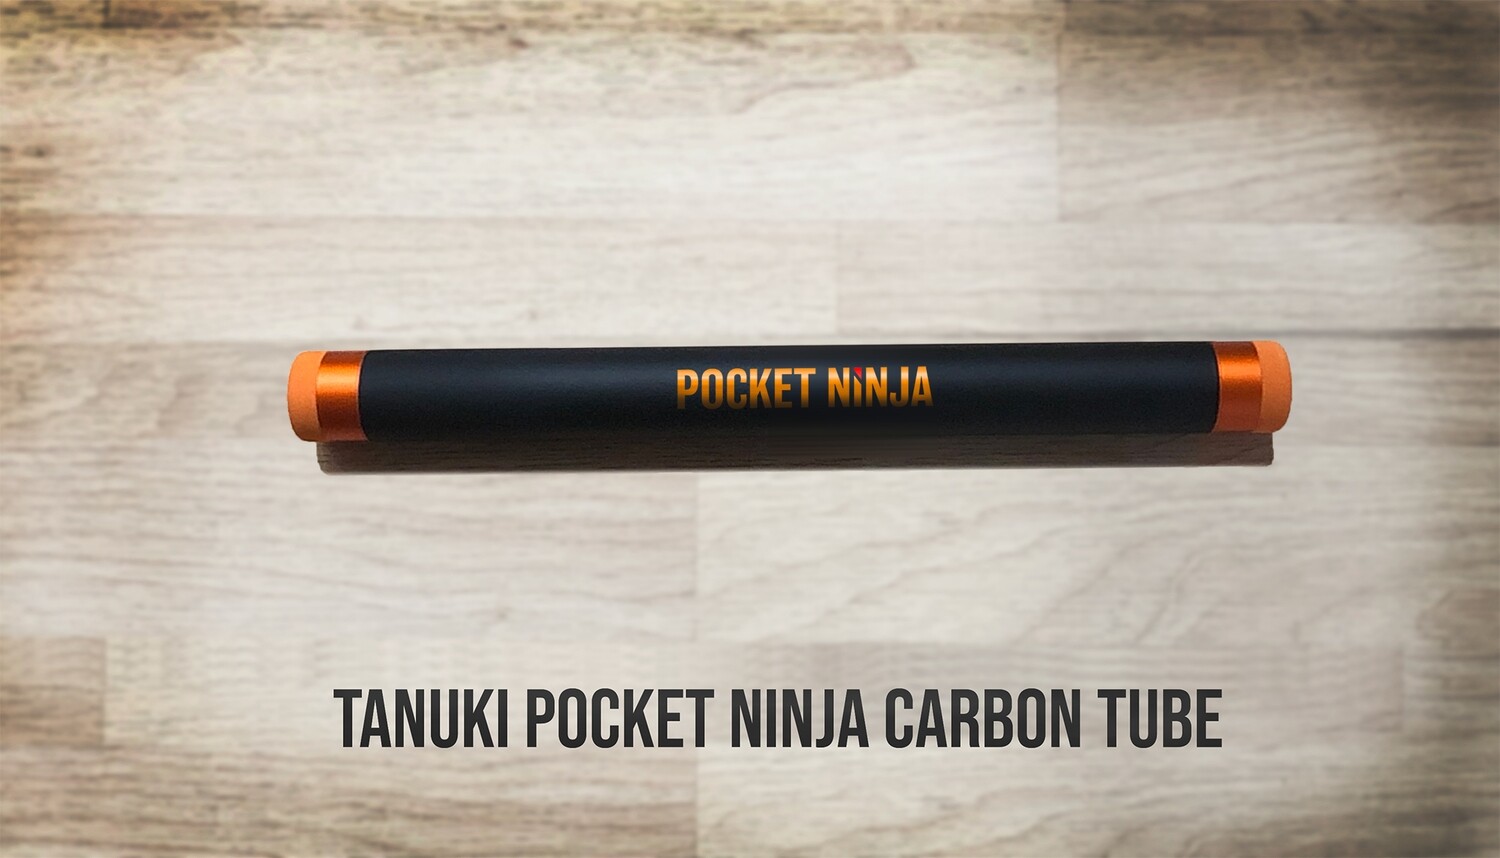 Pocket Ninja Carbon Tube